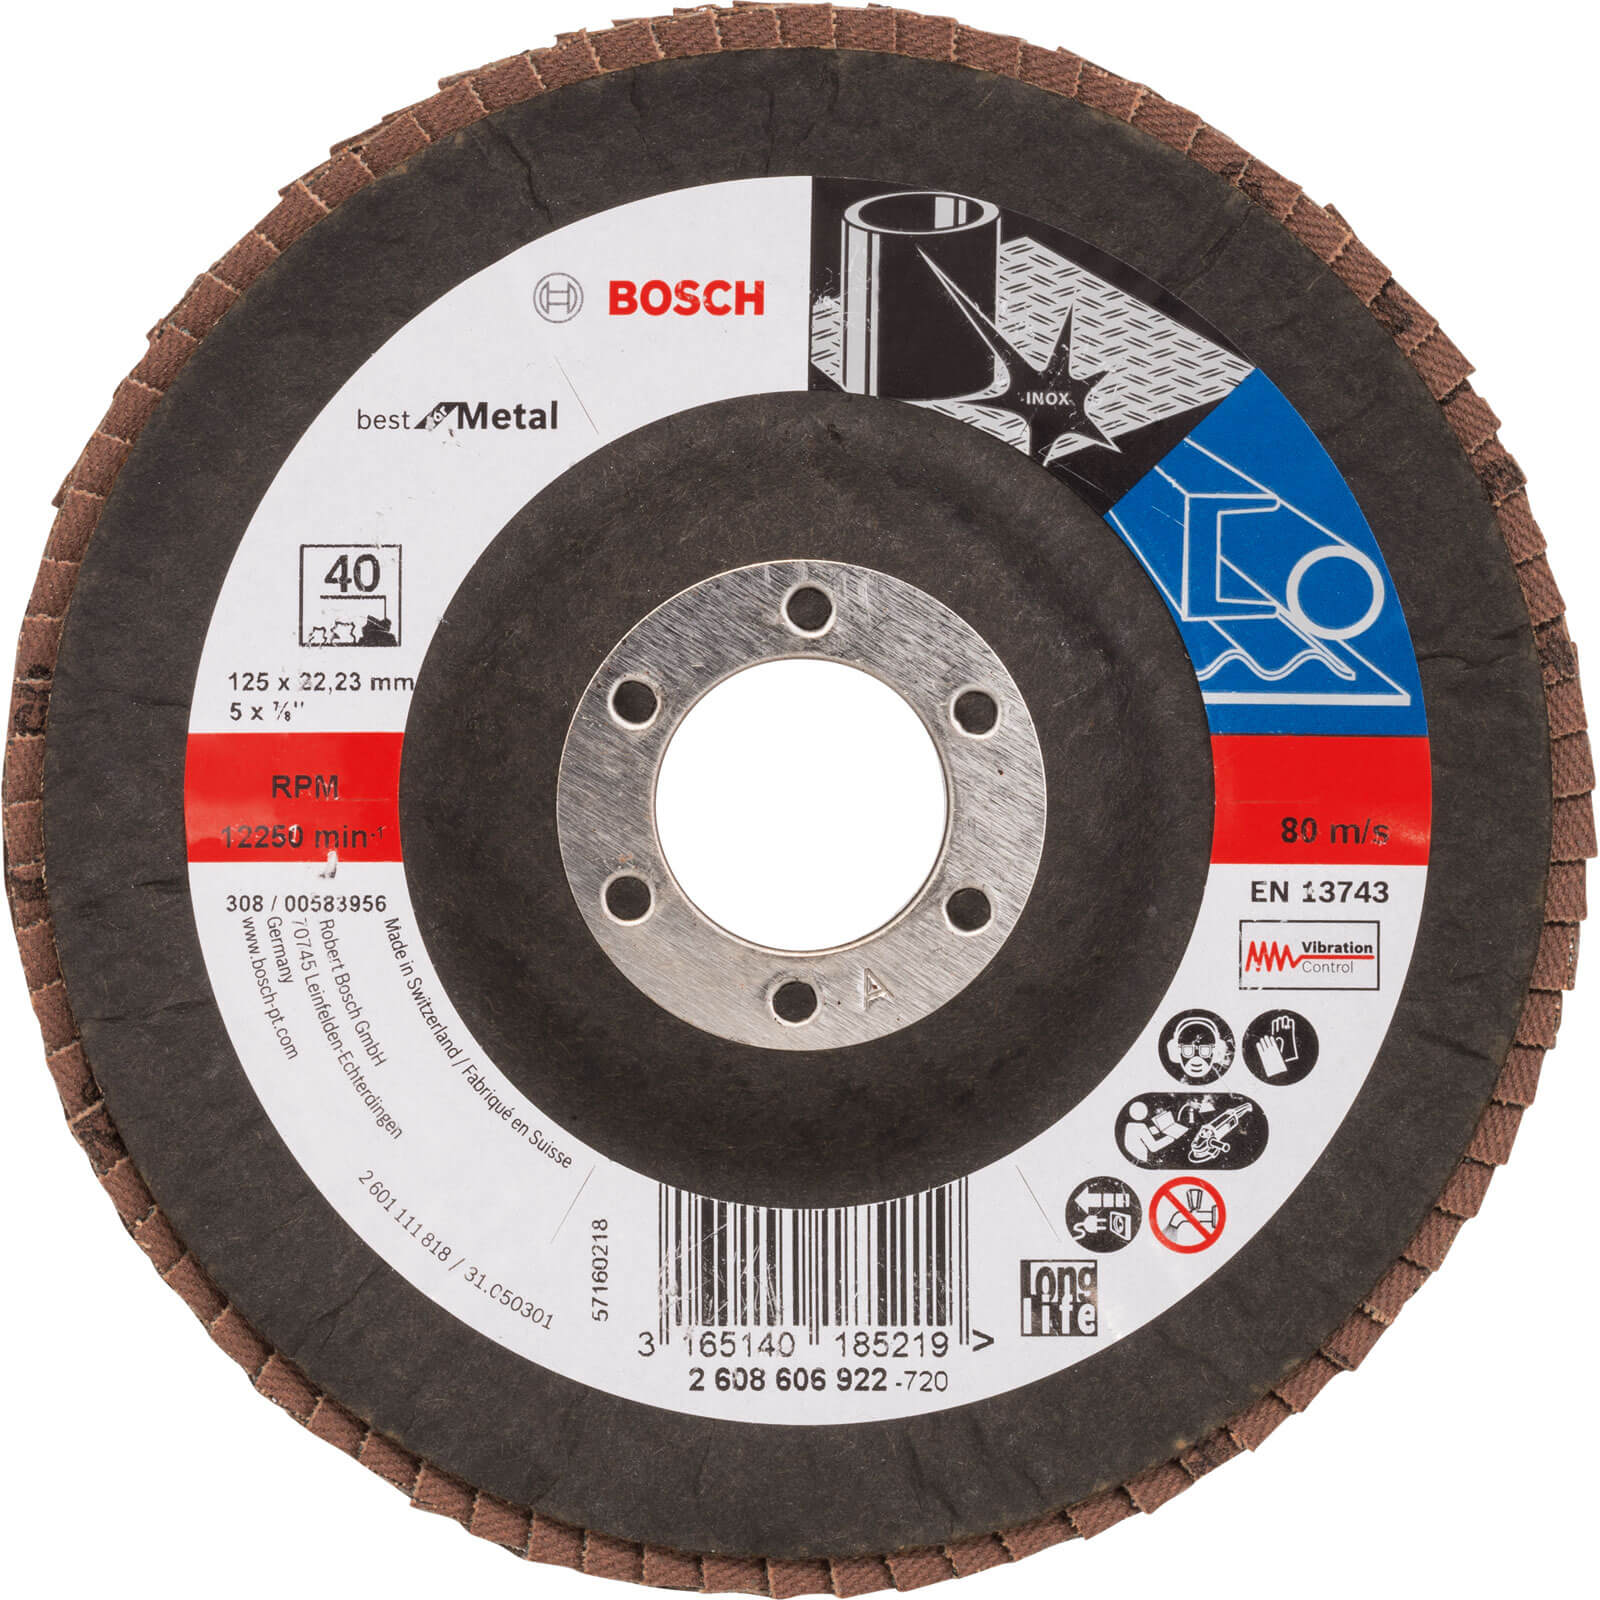 Photo of Bosch Zirconium Abrasive Flap Disc 125mm 40g